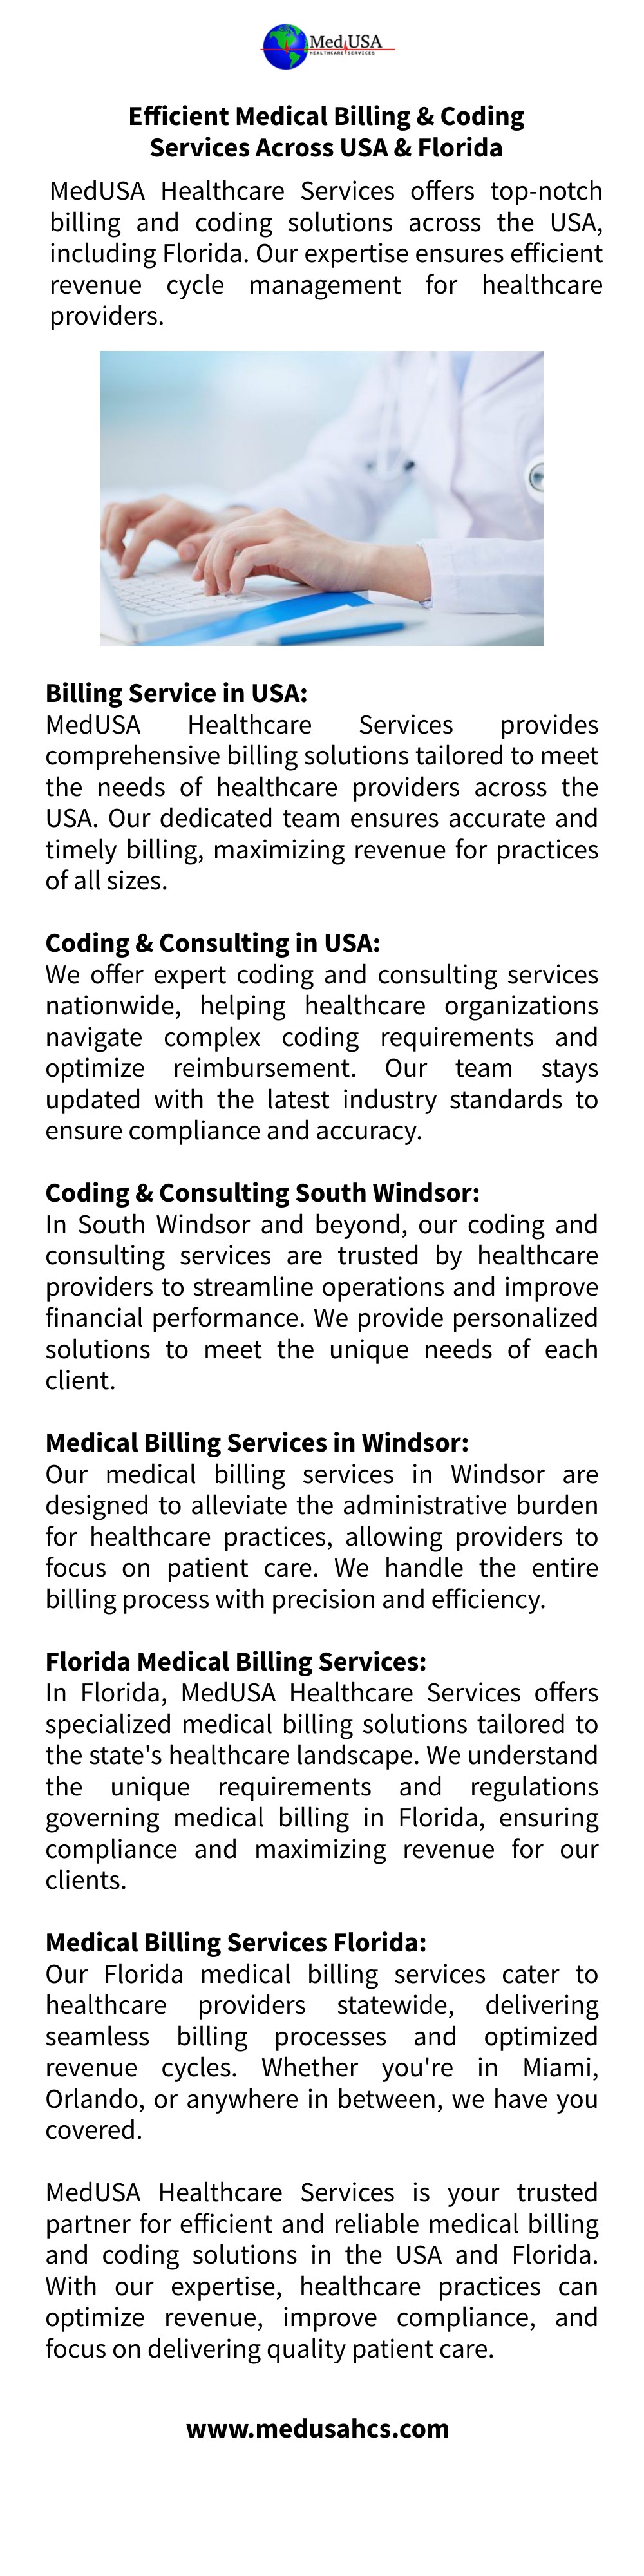 Efficient Medical Billing & Coding Services Across USA & Florida